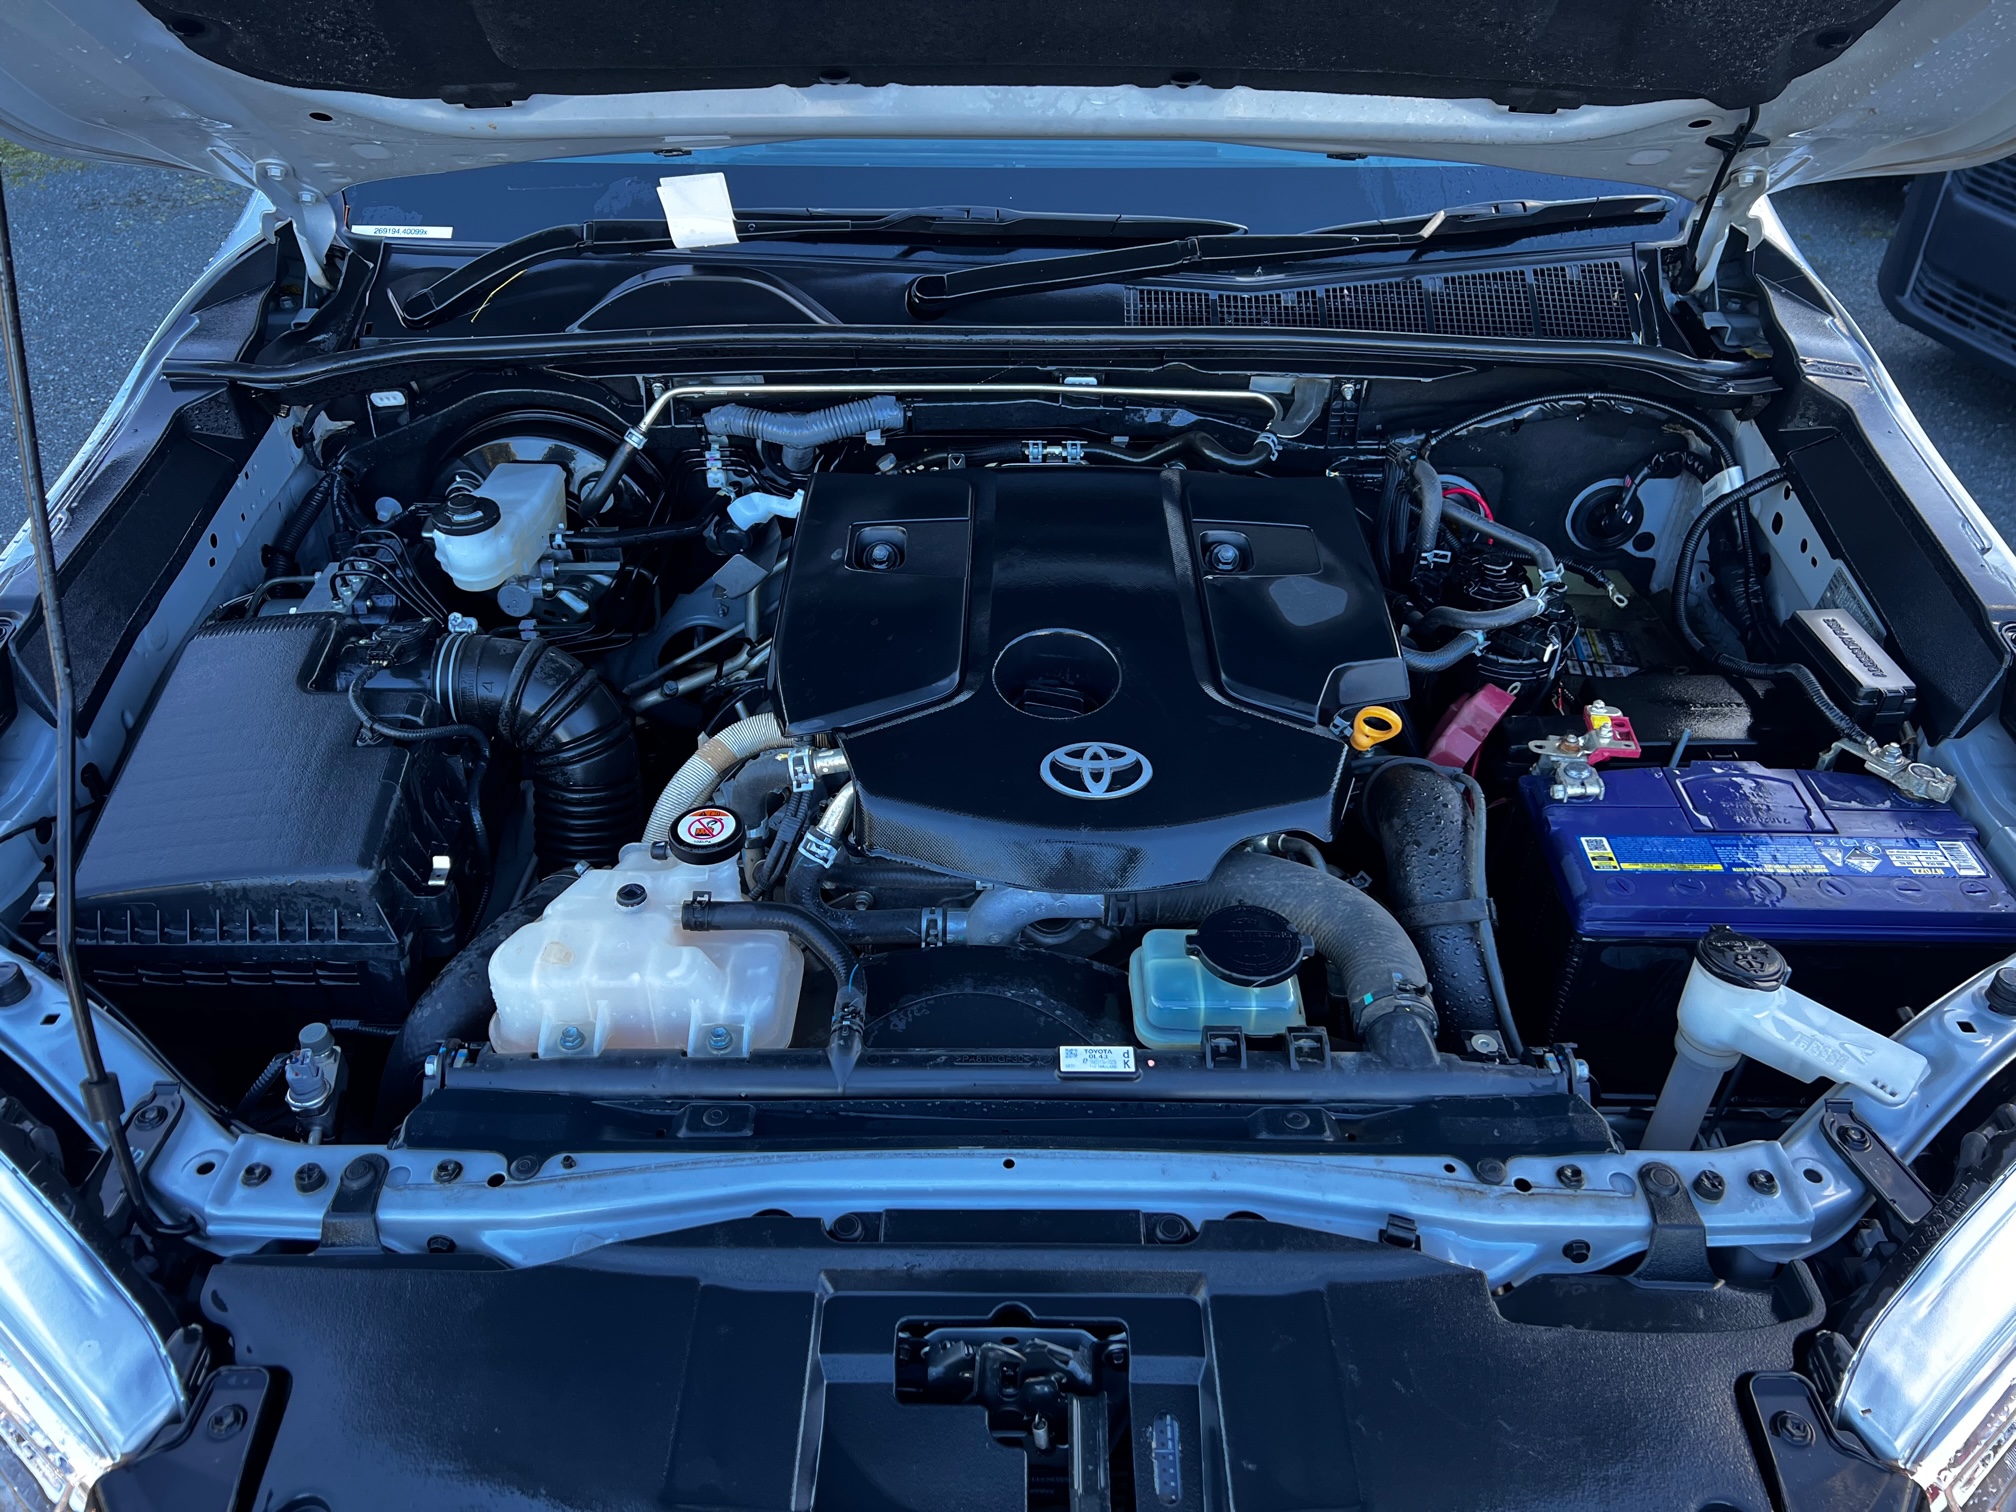 Toyota Hilux SR5 2019 Image 7